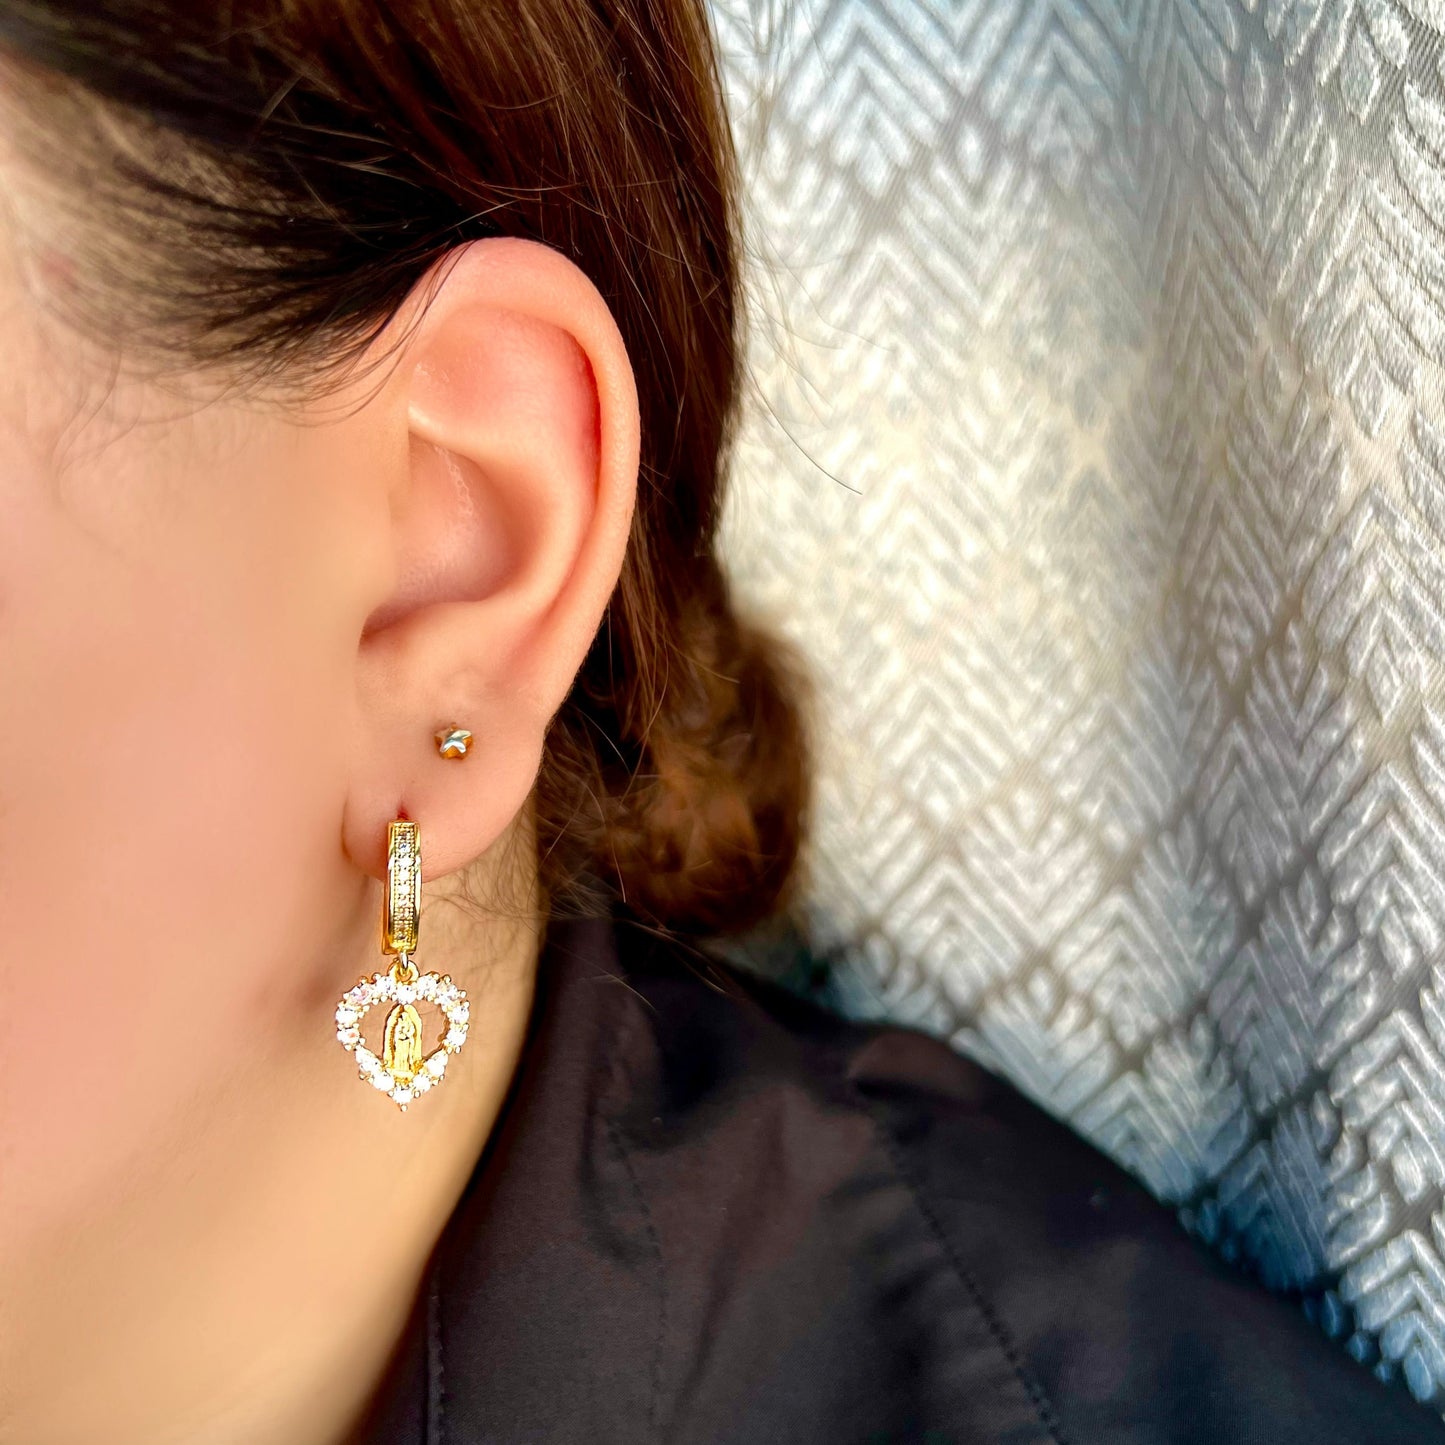 Virgencita Corazoncito Earrings